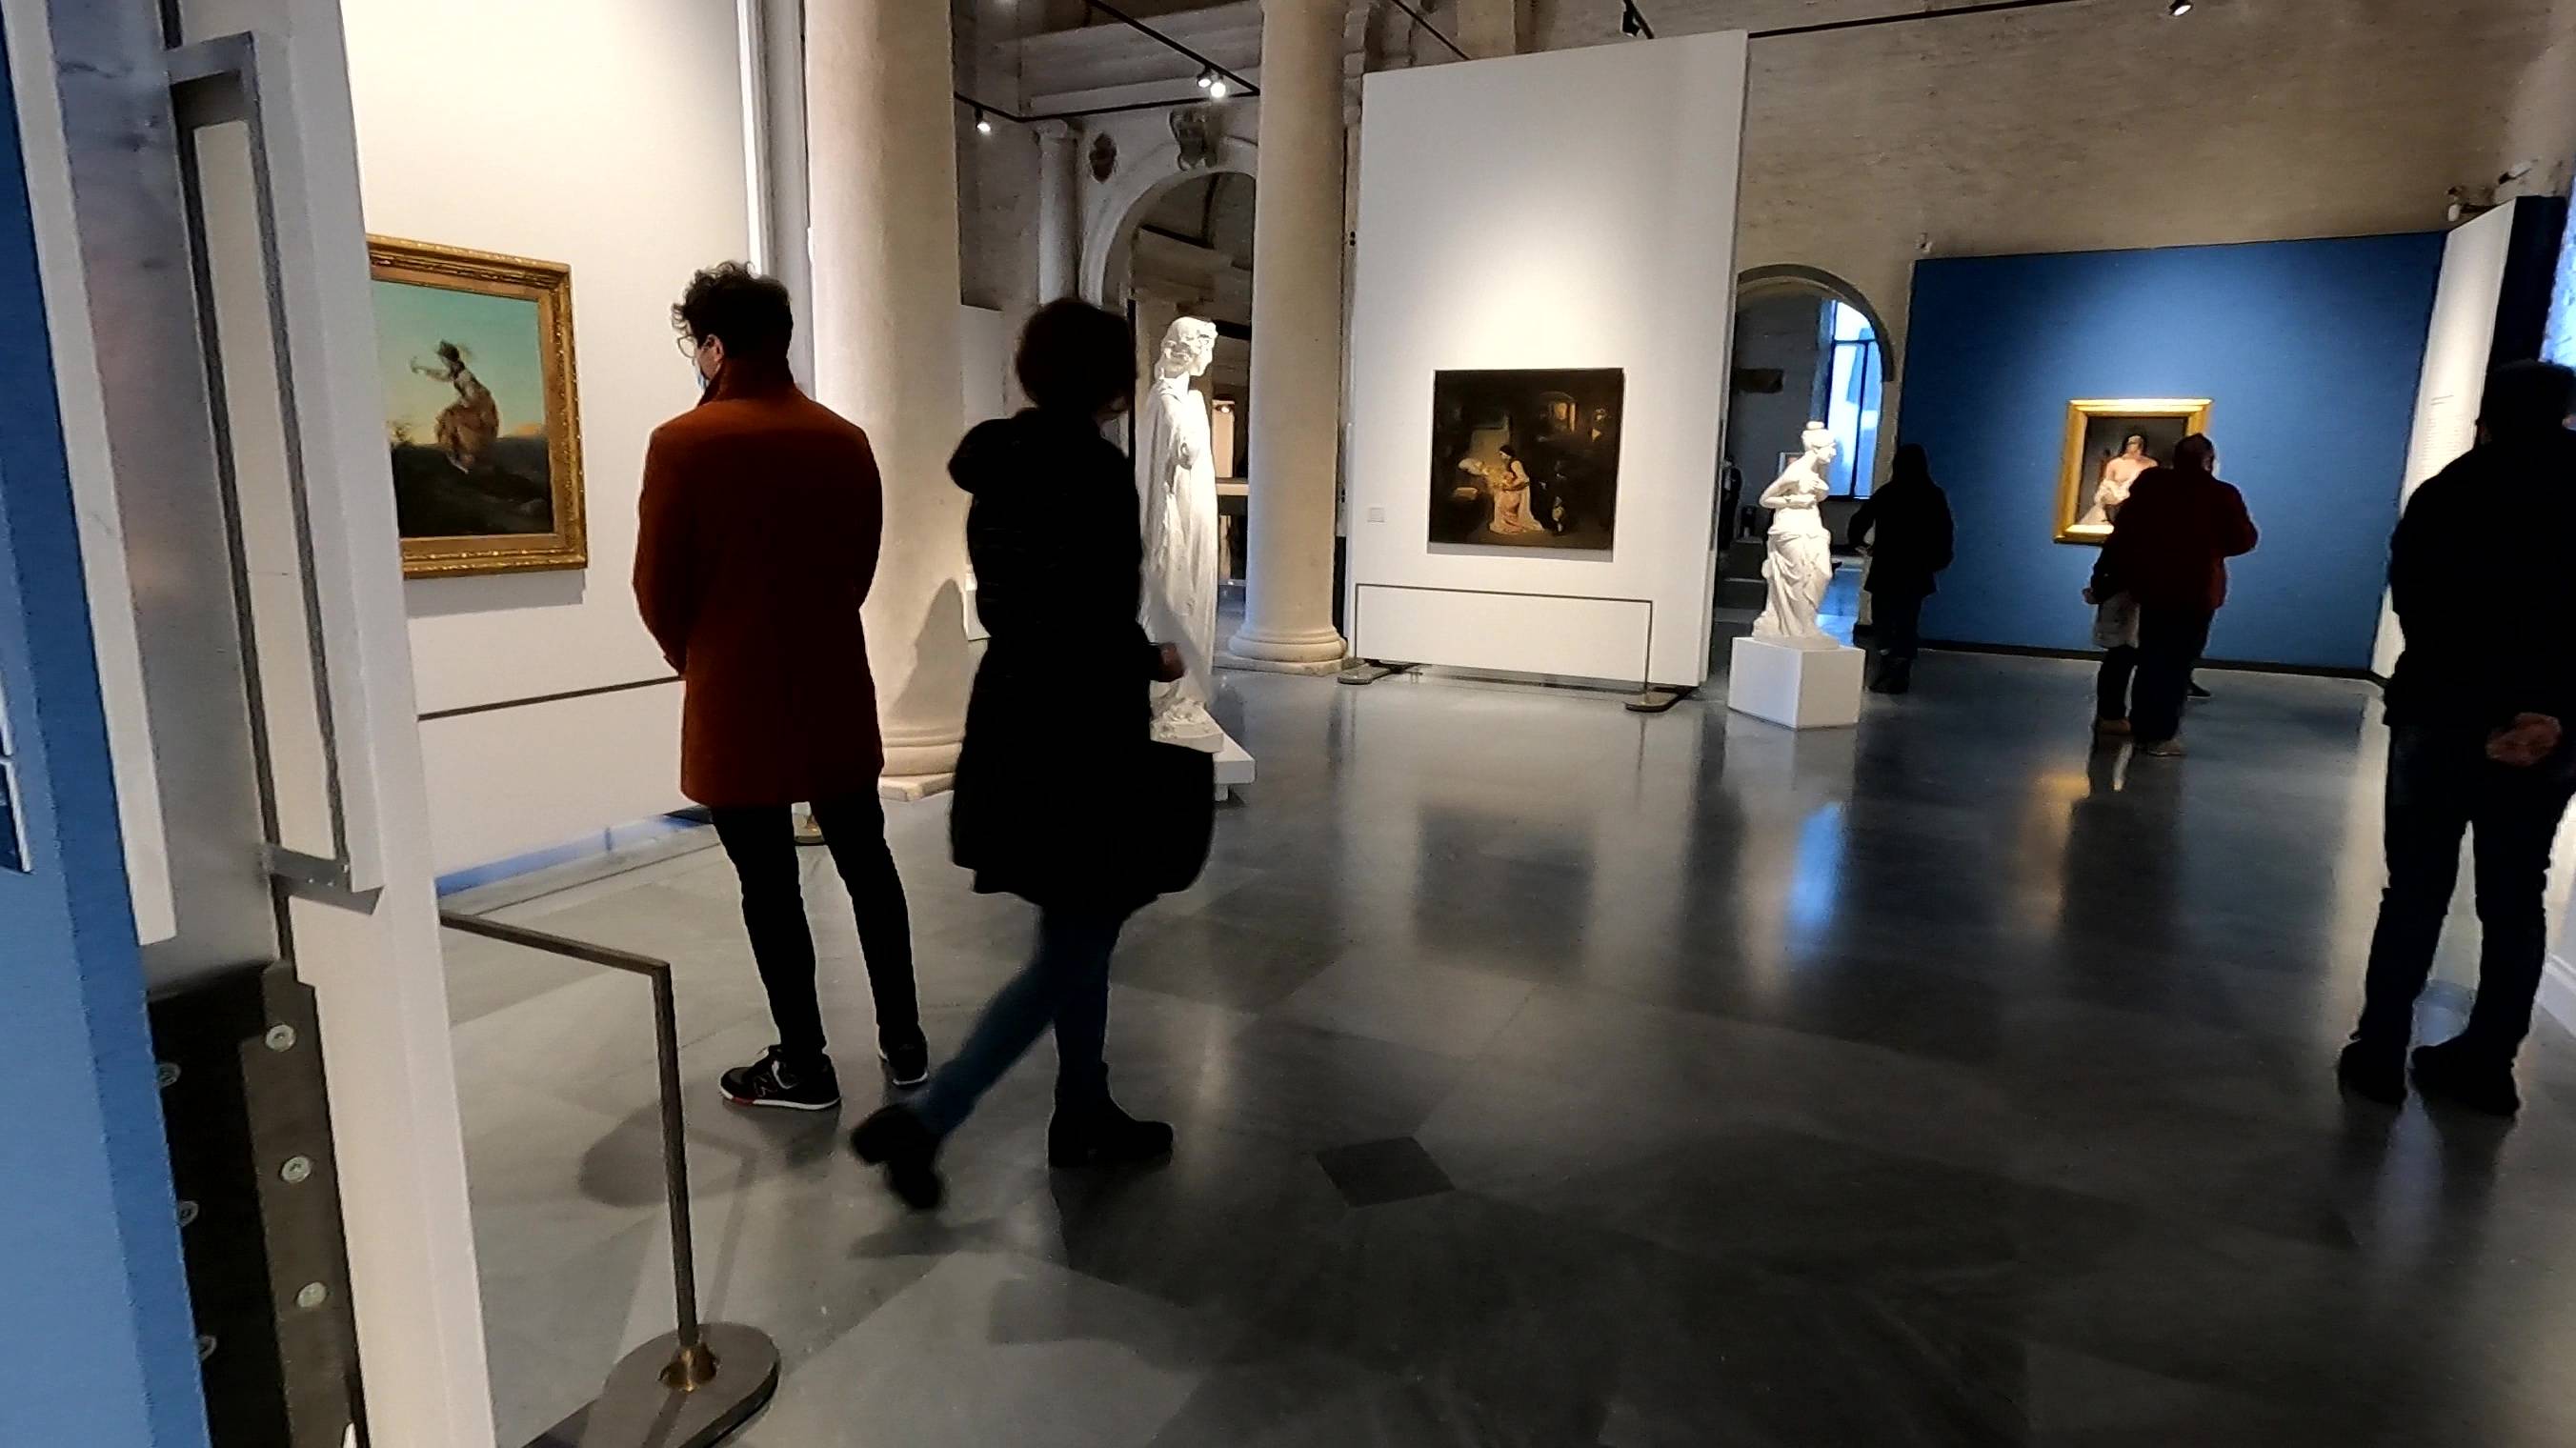 A beautiful hidden museum in Verona